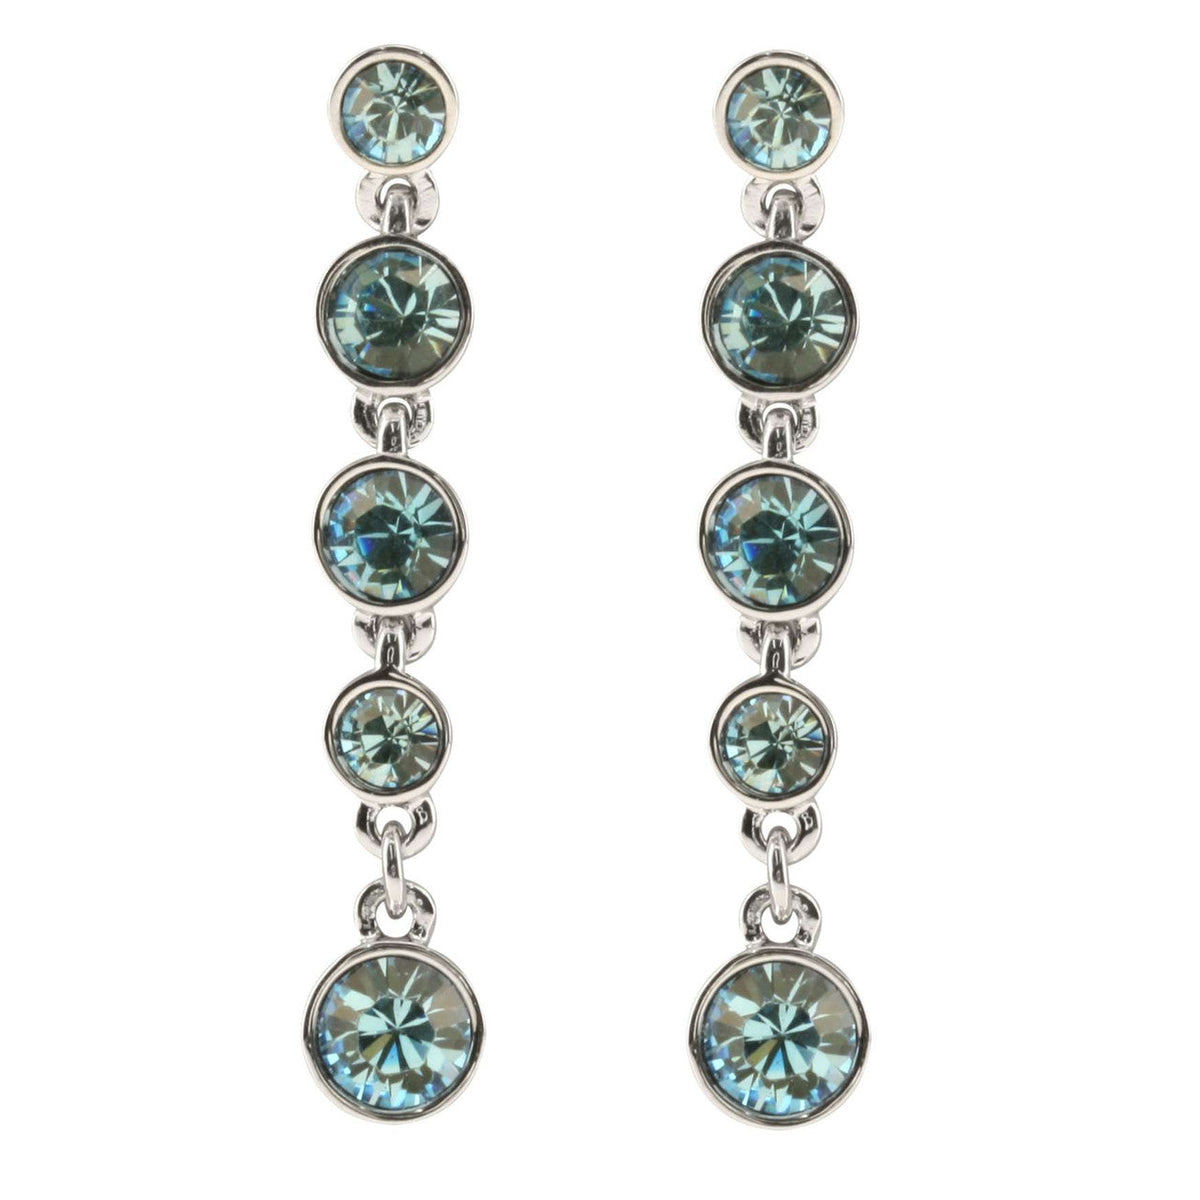 Crystal Fringe Tiara Earrings - Aqua Blue